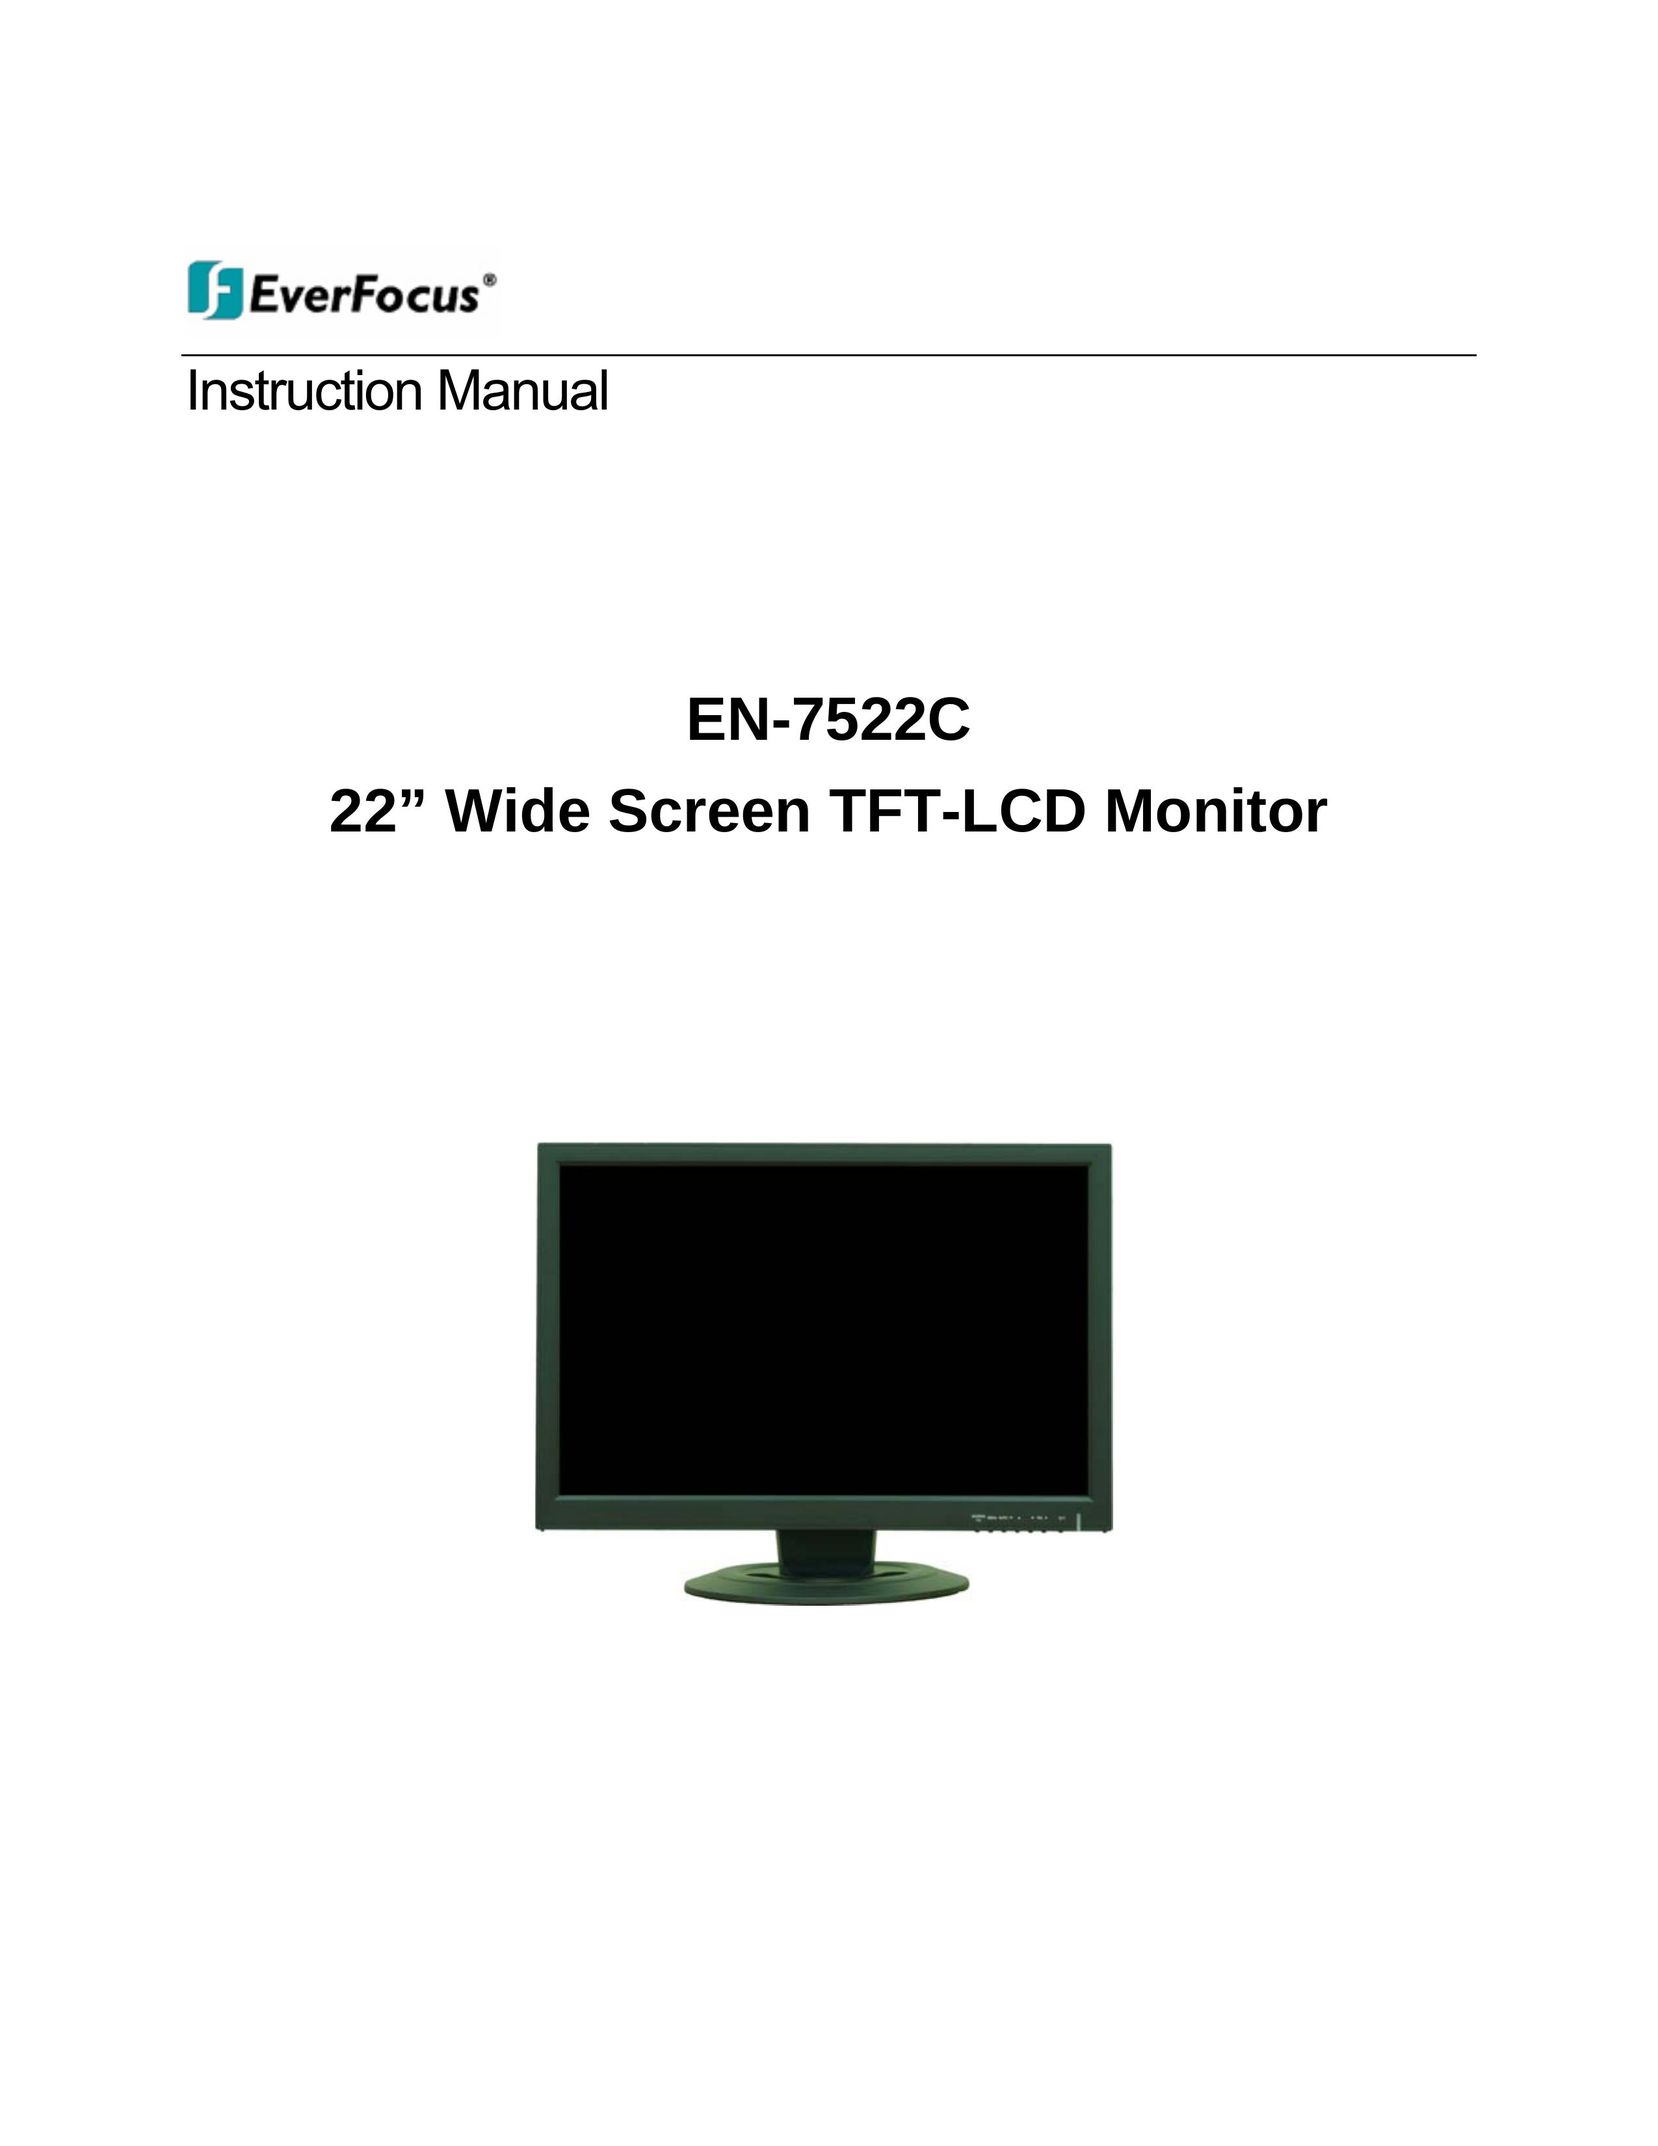 EverFocus EN-7522C Computer Monitor User Manual